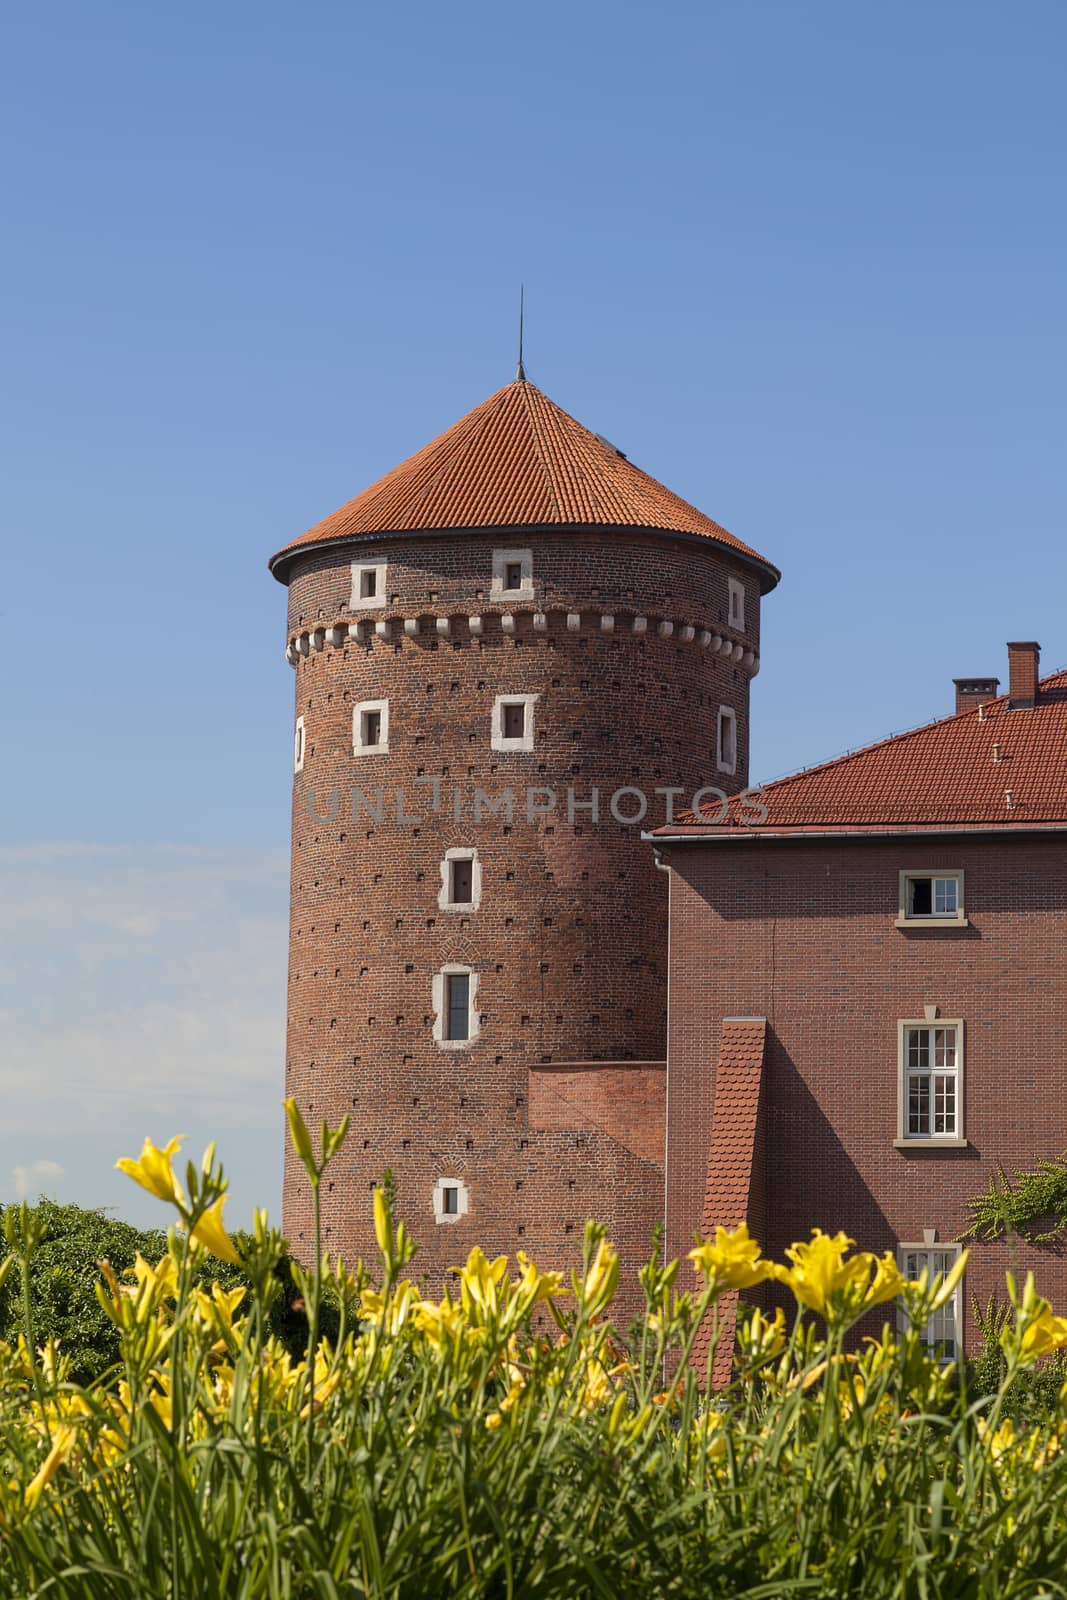 Wawel Royal Castle with Sandomierska Tower, Krakow, Poland.